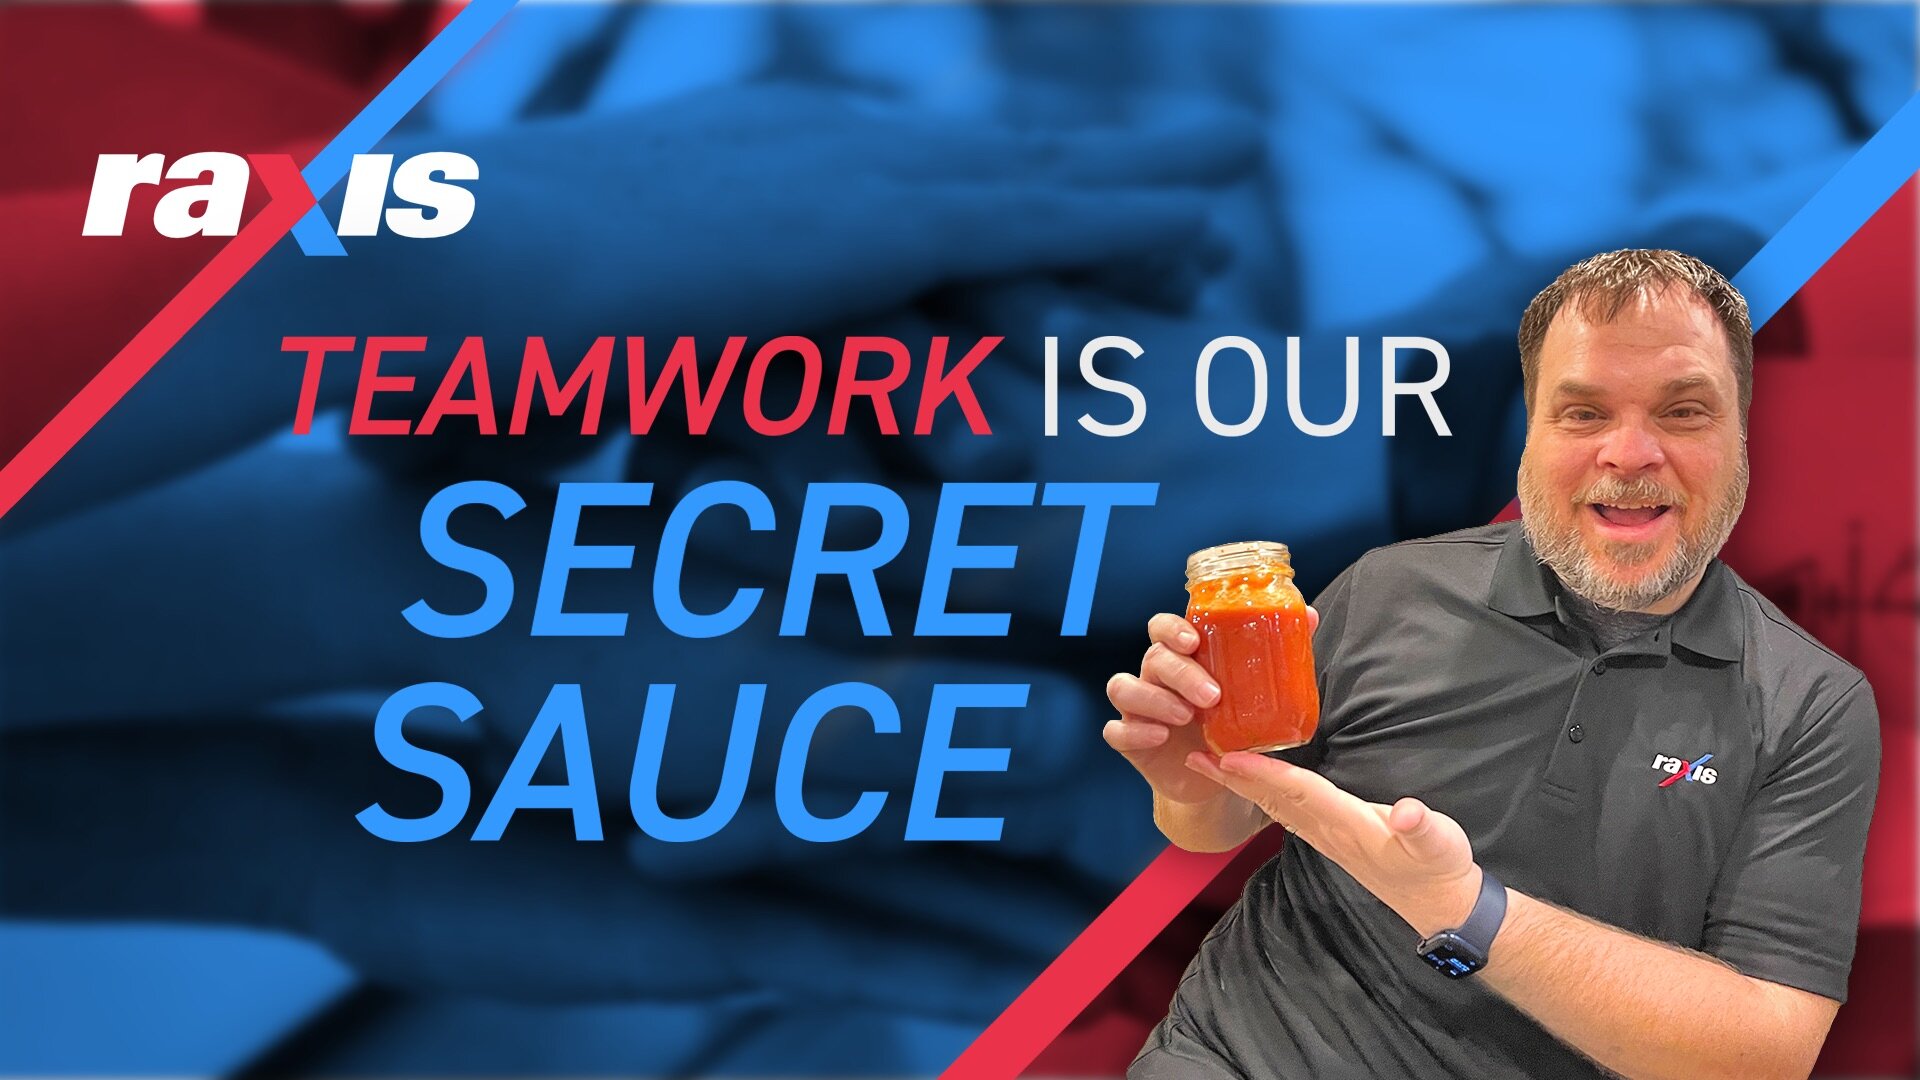 Teamwork is our secret sauce